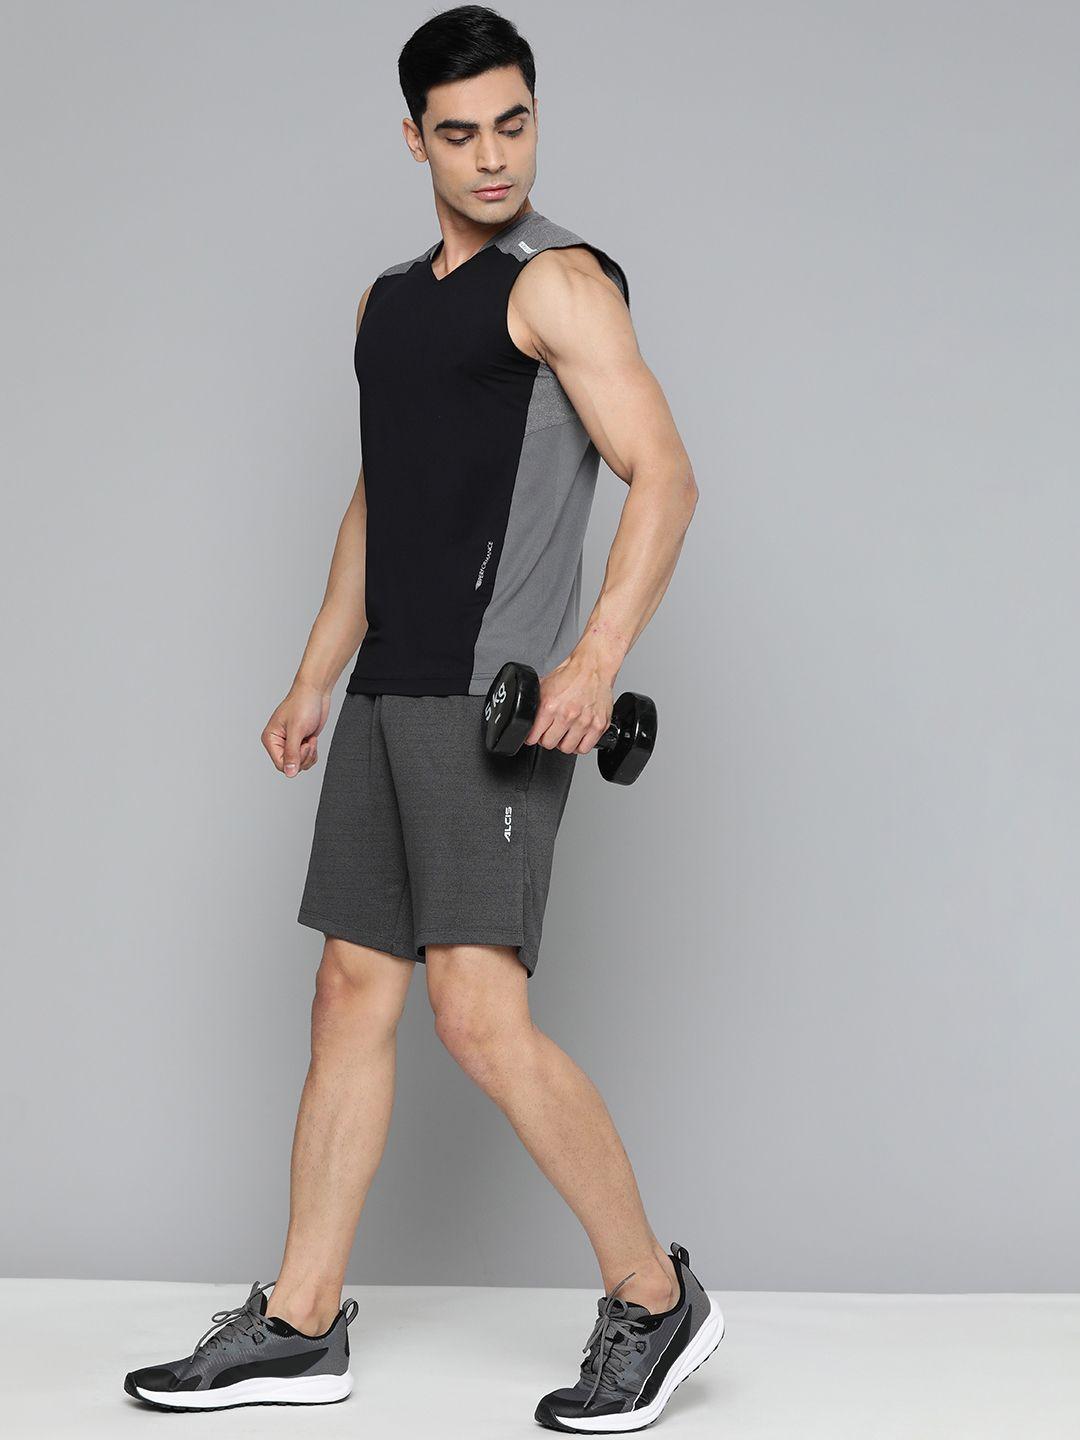 alcis-slim-fit-rapid-dry-training-or-gym-sports-shorts